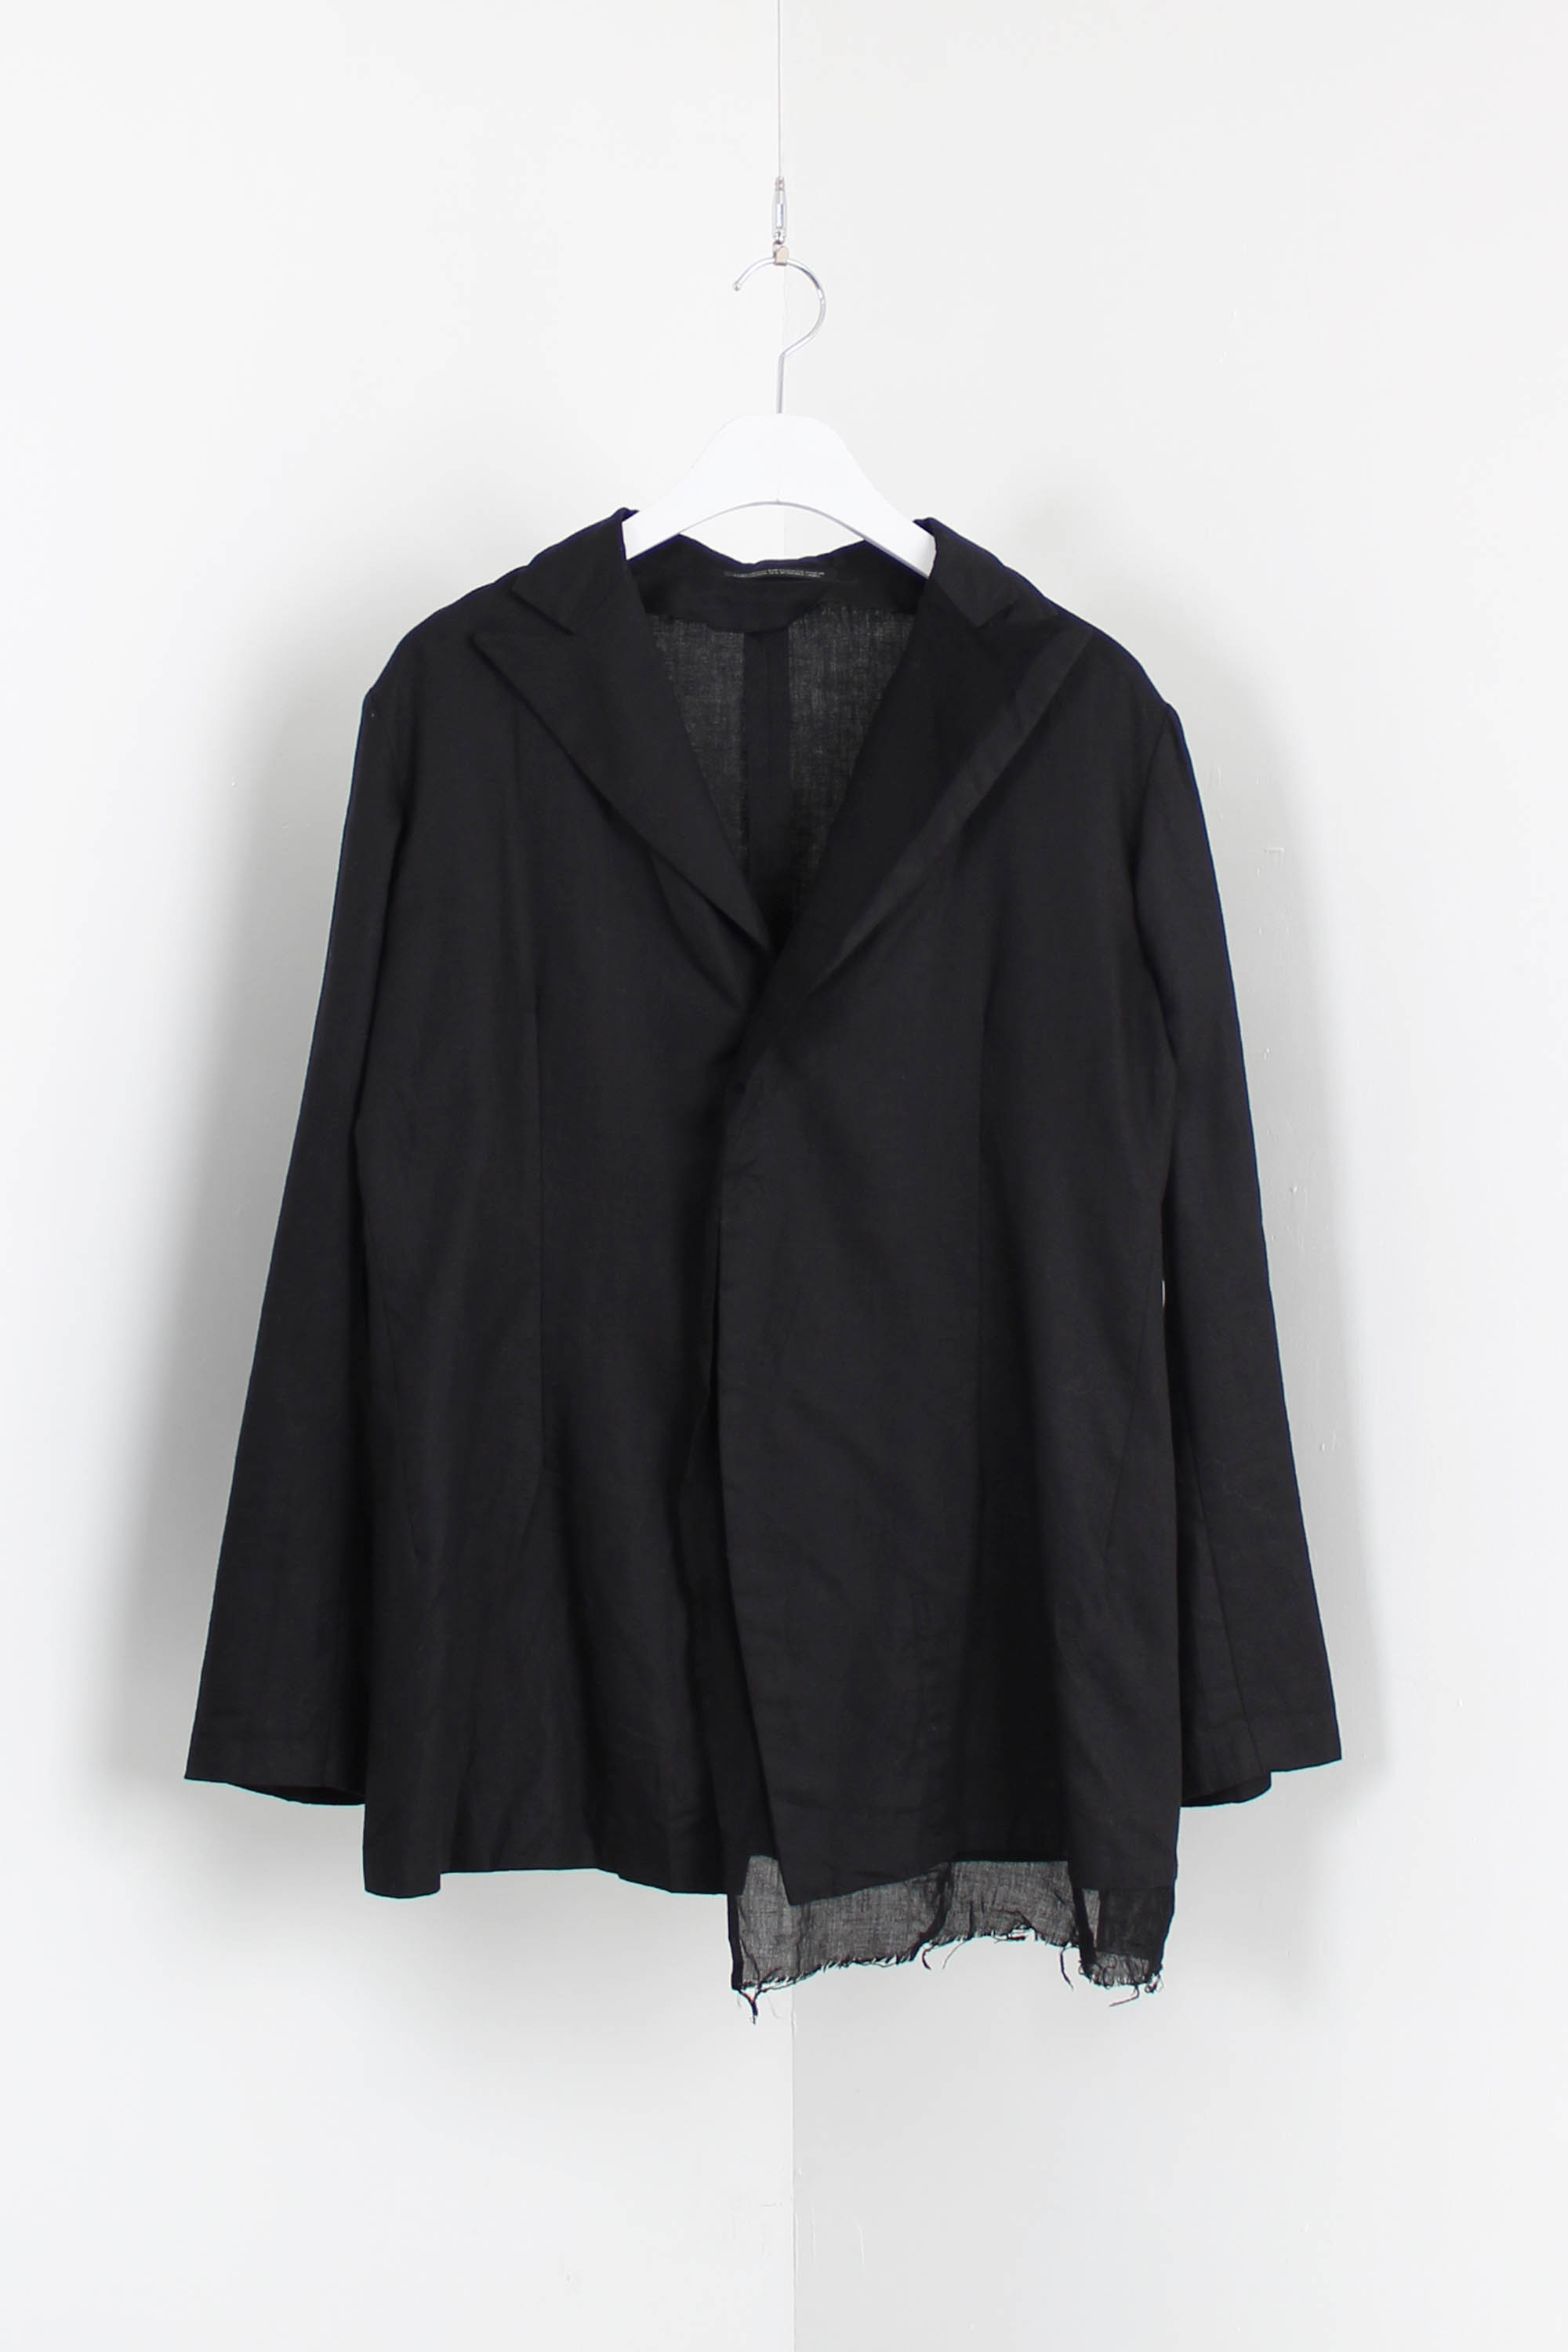 Yohji Yamamoto + NOIR tailored 3button jacket